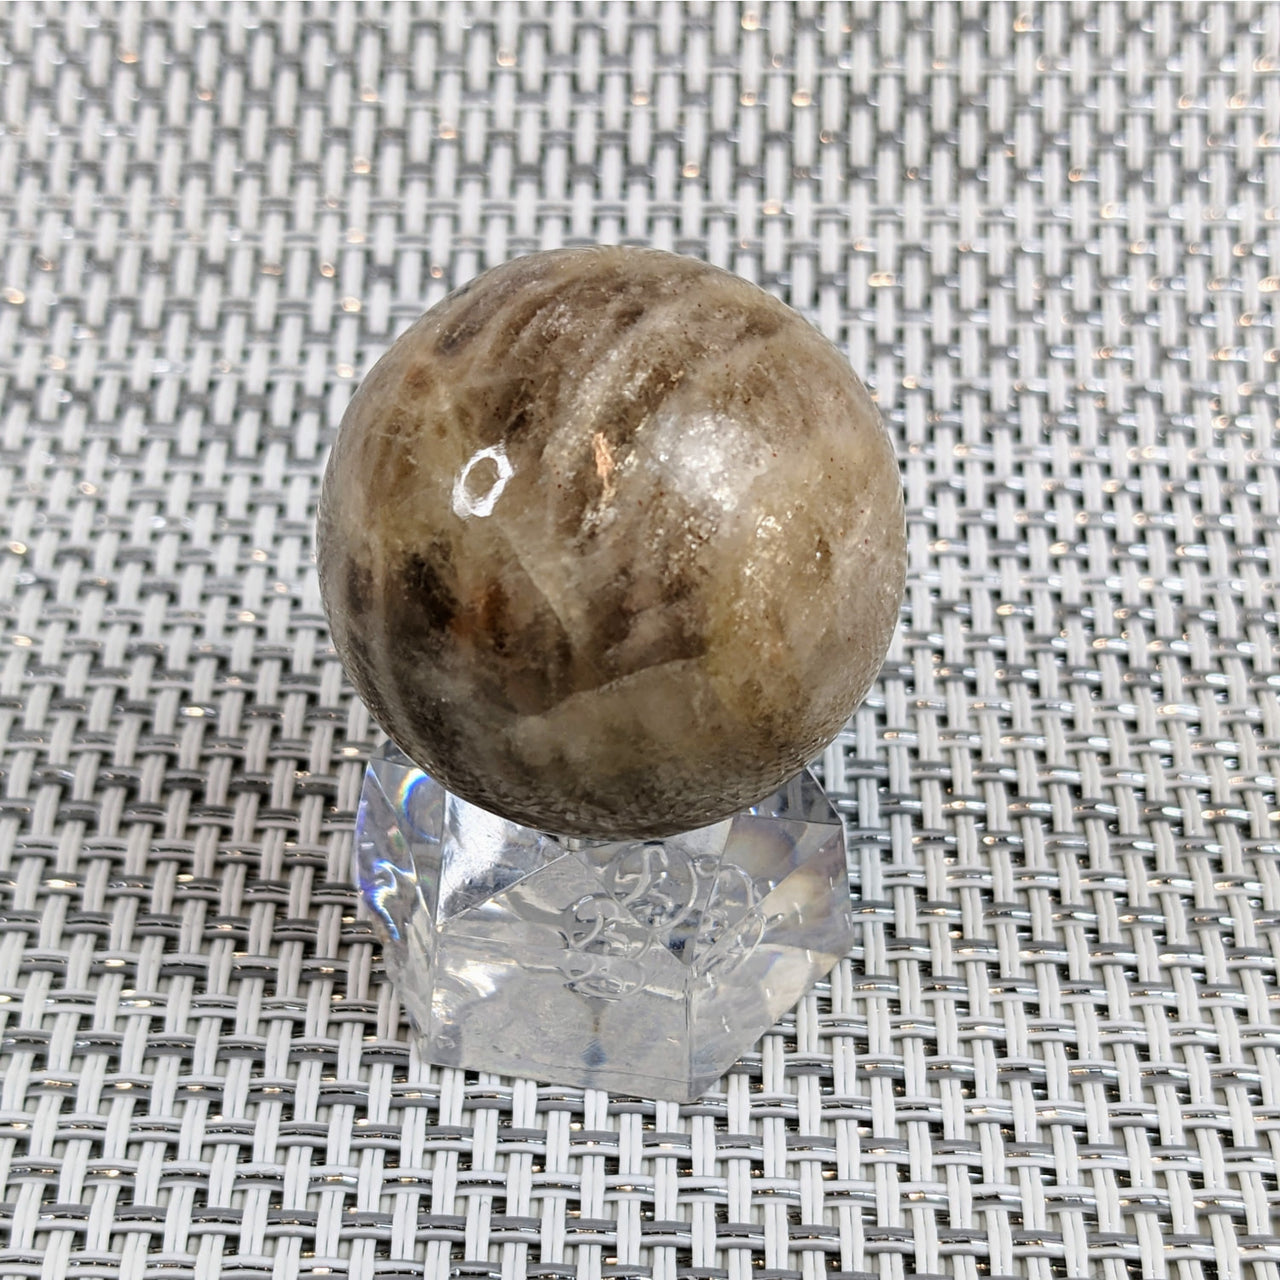 Iridescent Sunfire 1.2’ Moonstone Sphere on Glass Base - Product Code #LV4836